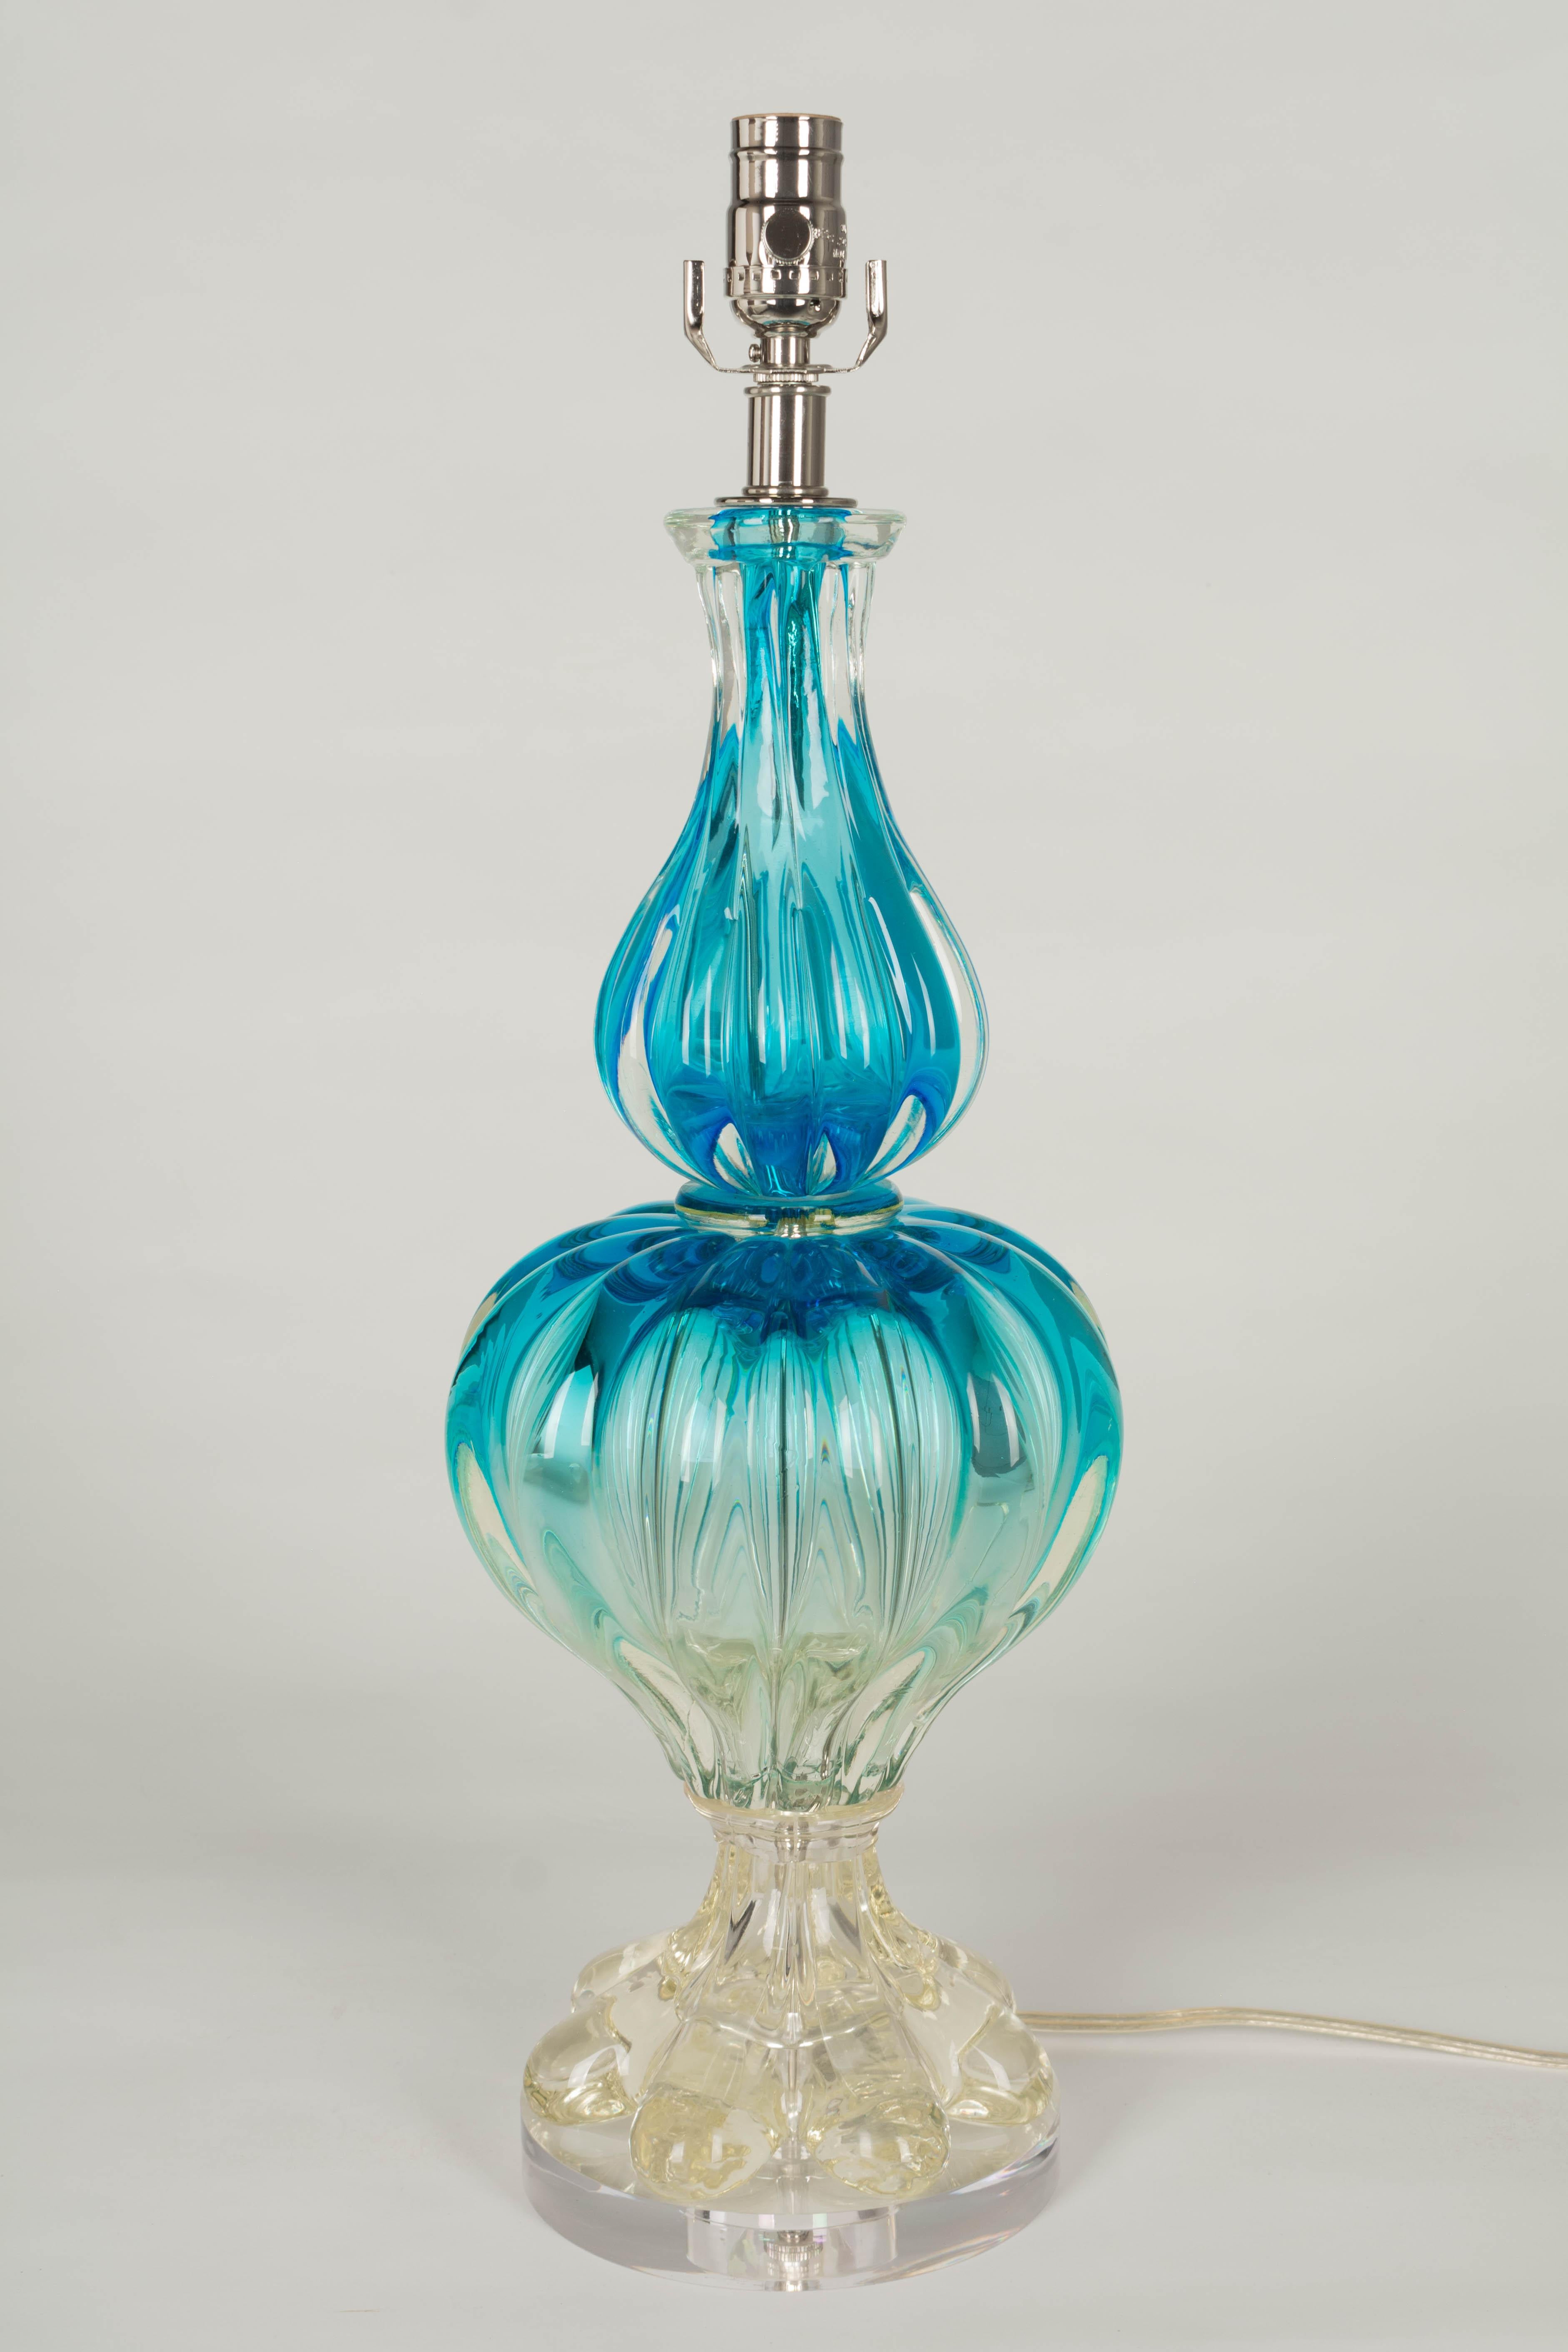 Italian Midcentury Seguso Murano Glass Lamp For Sale